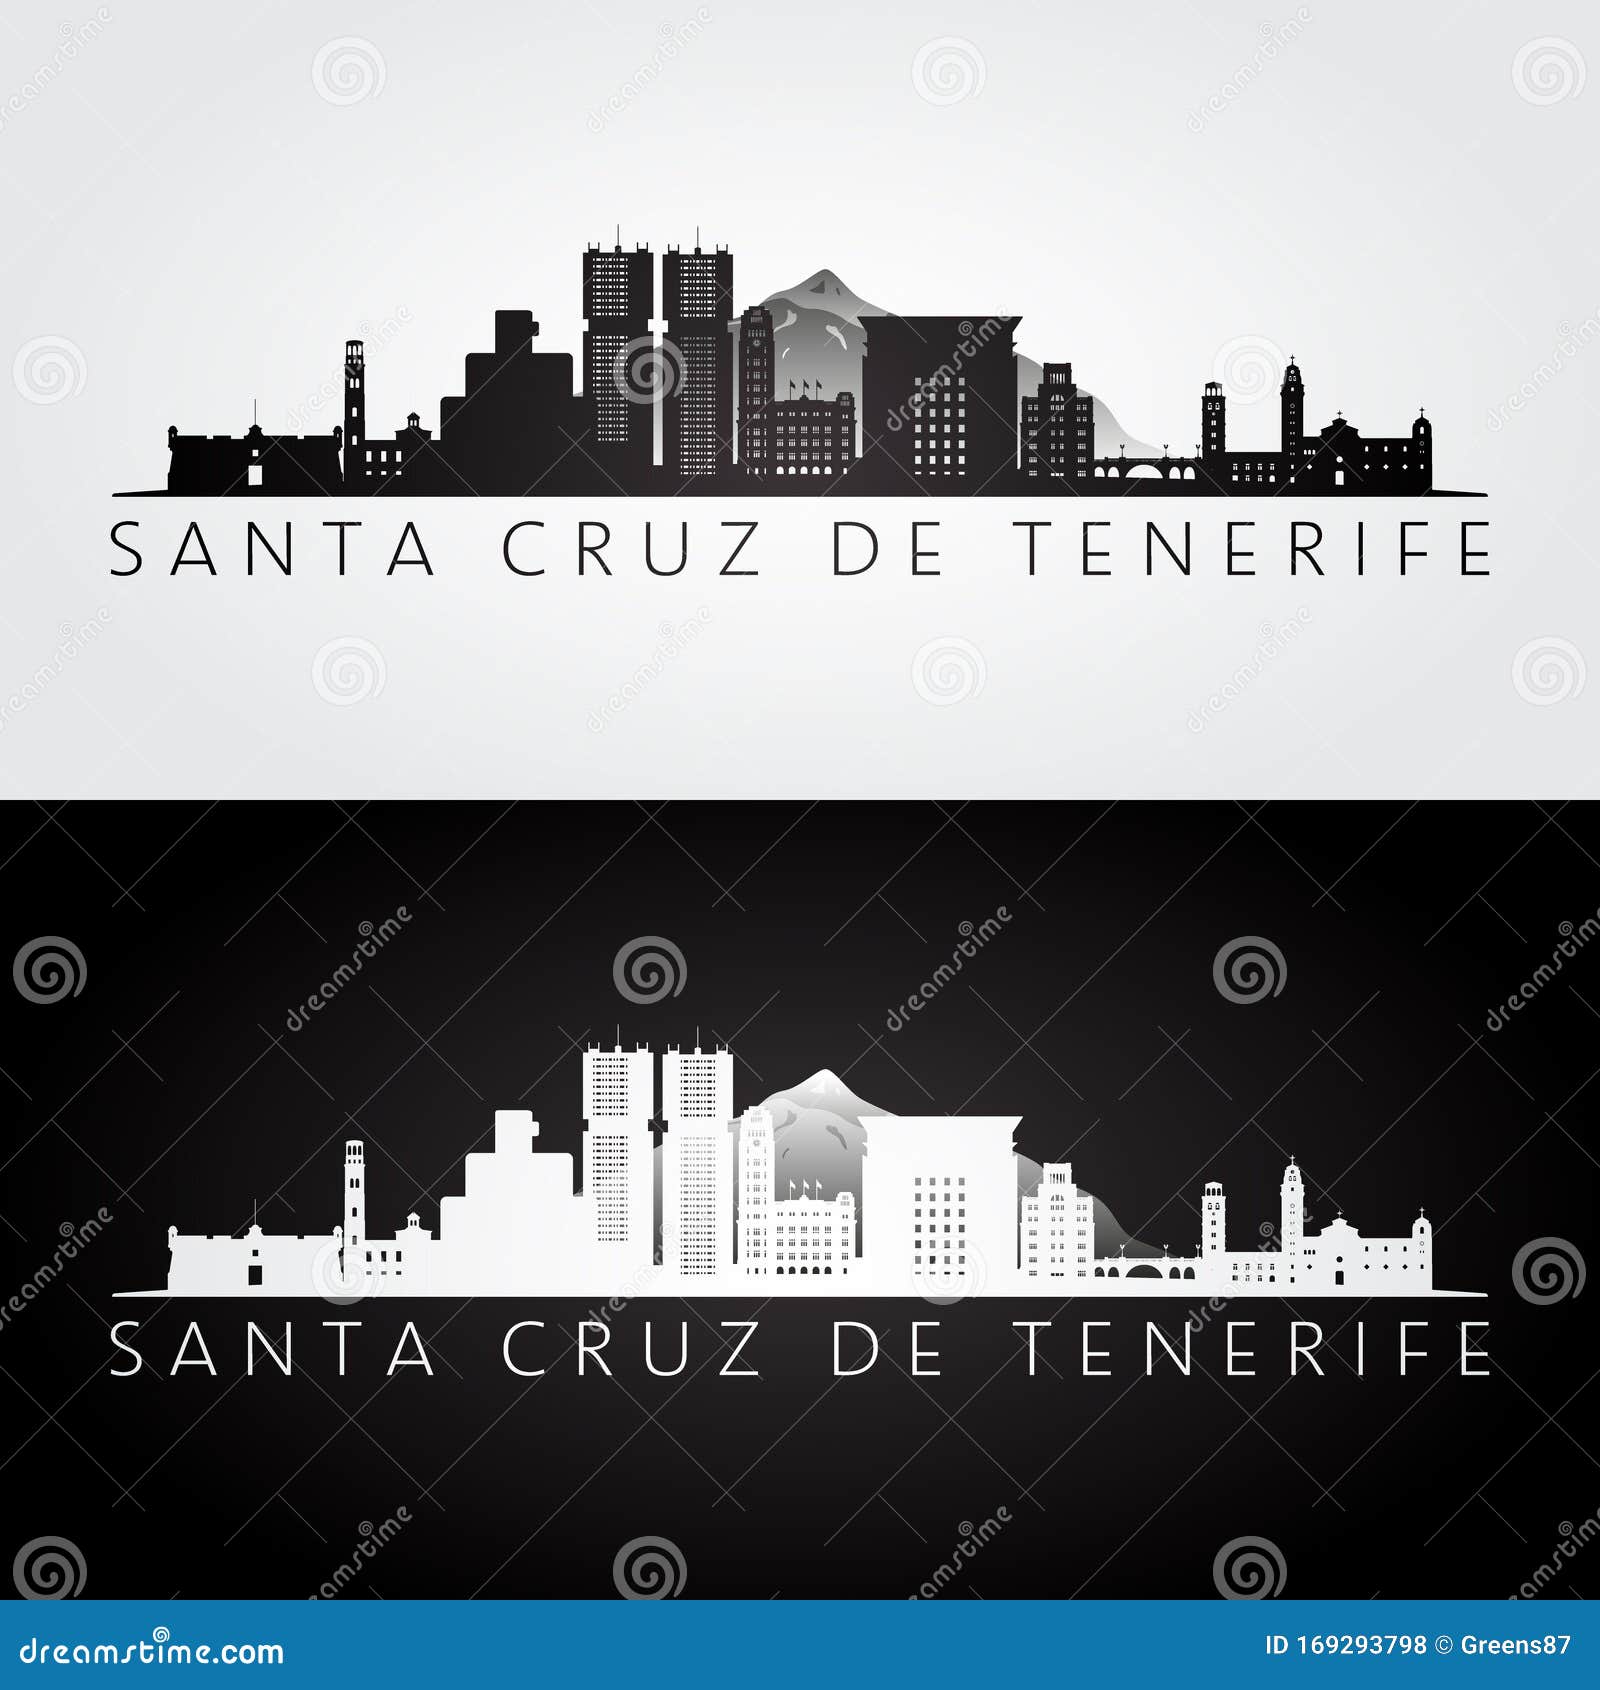 santa cruz de tenerife skyline and landmarks silhouette